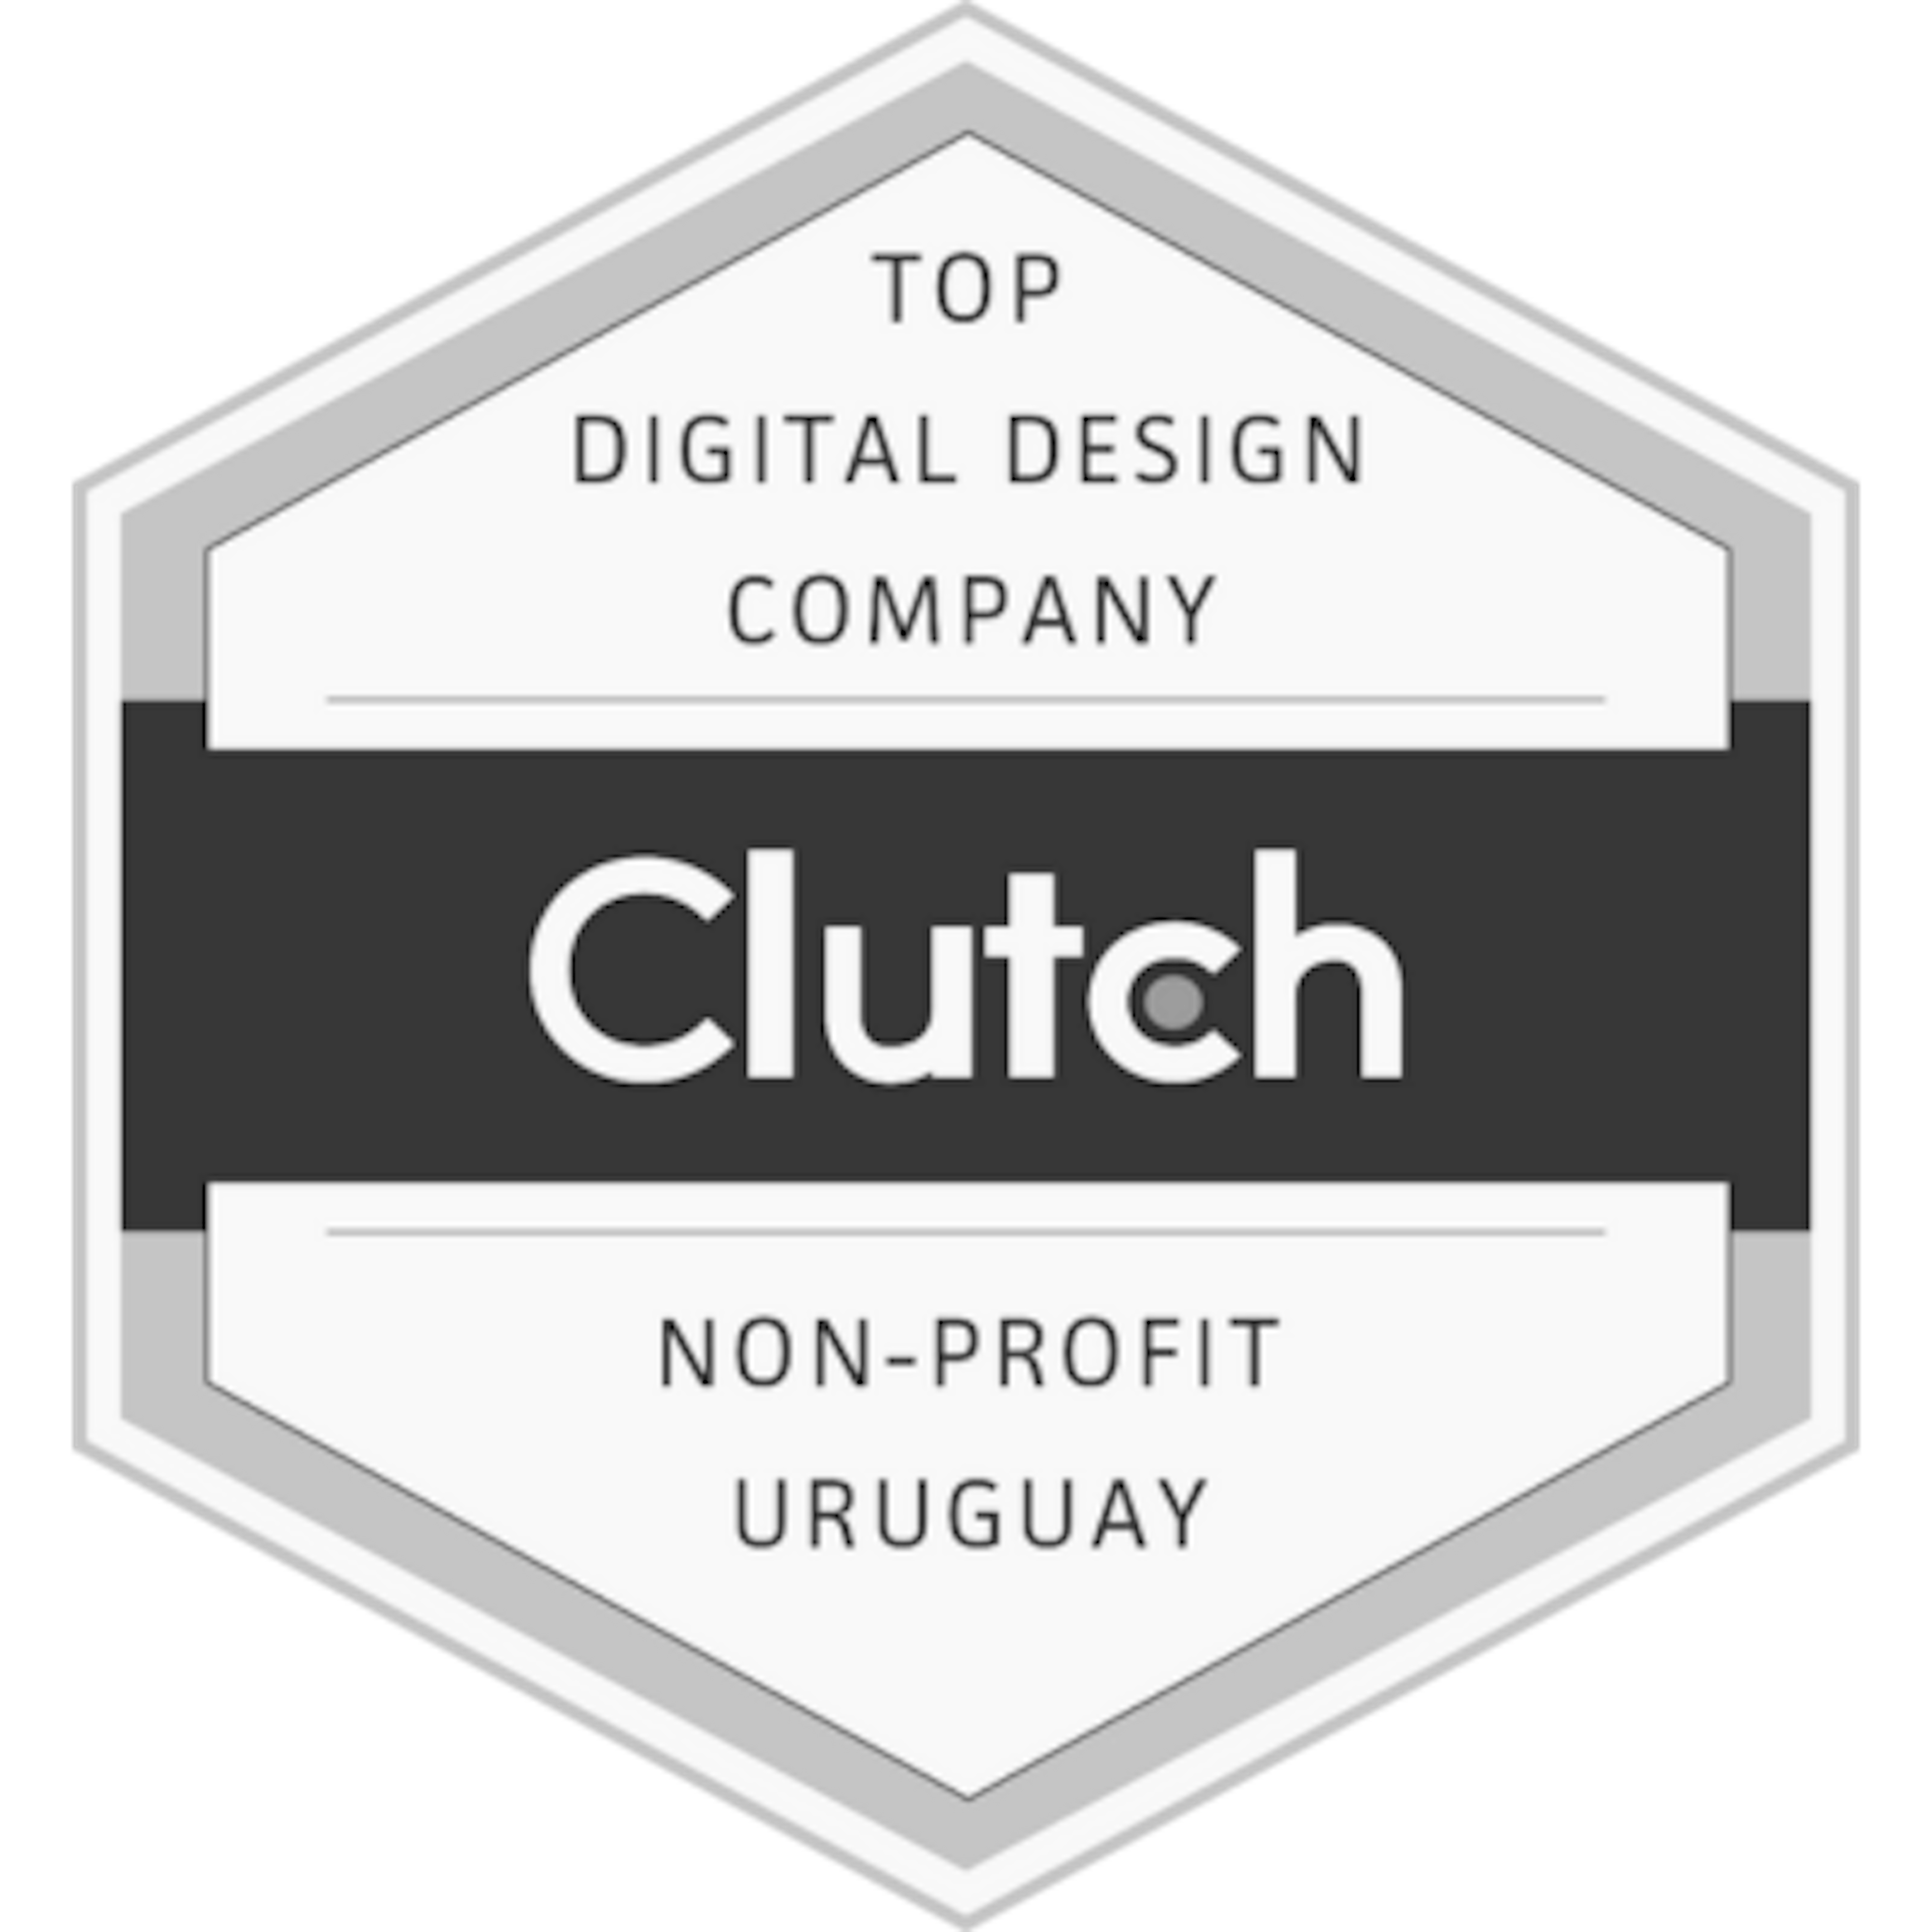 Top Digital Design Company - Non-Profit Uruguay